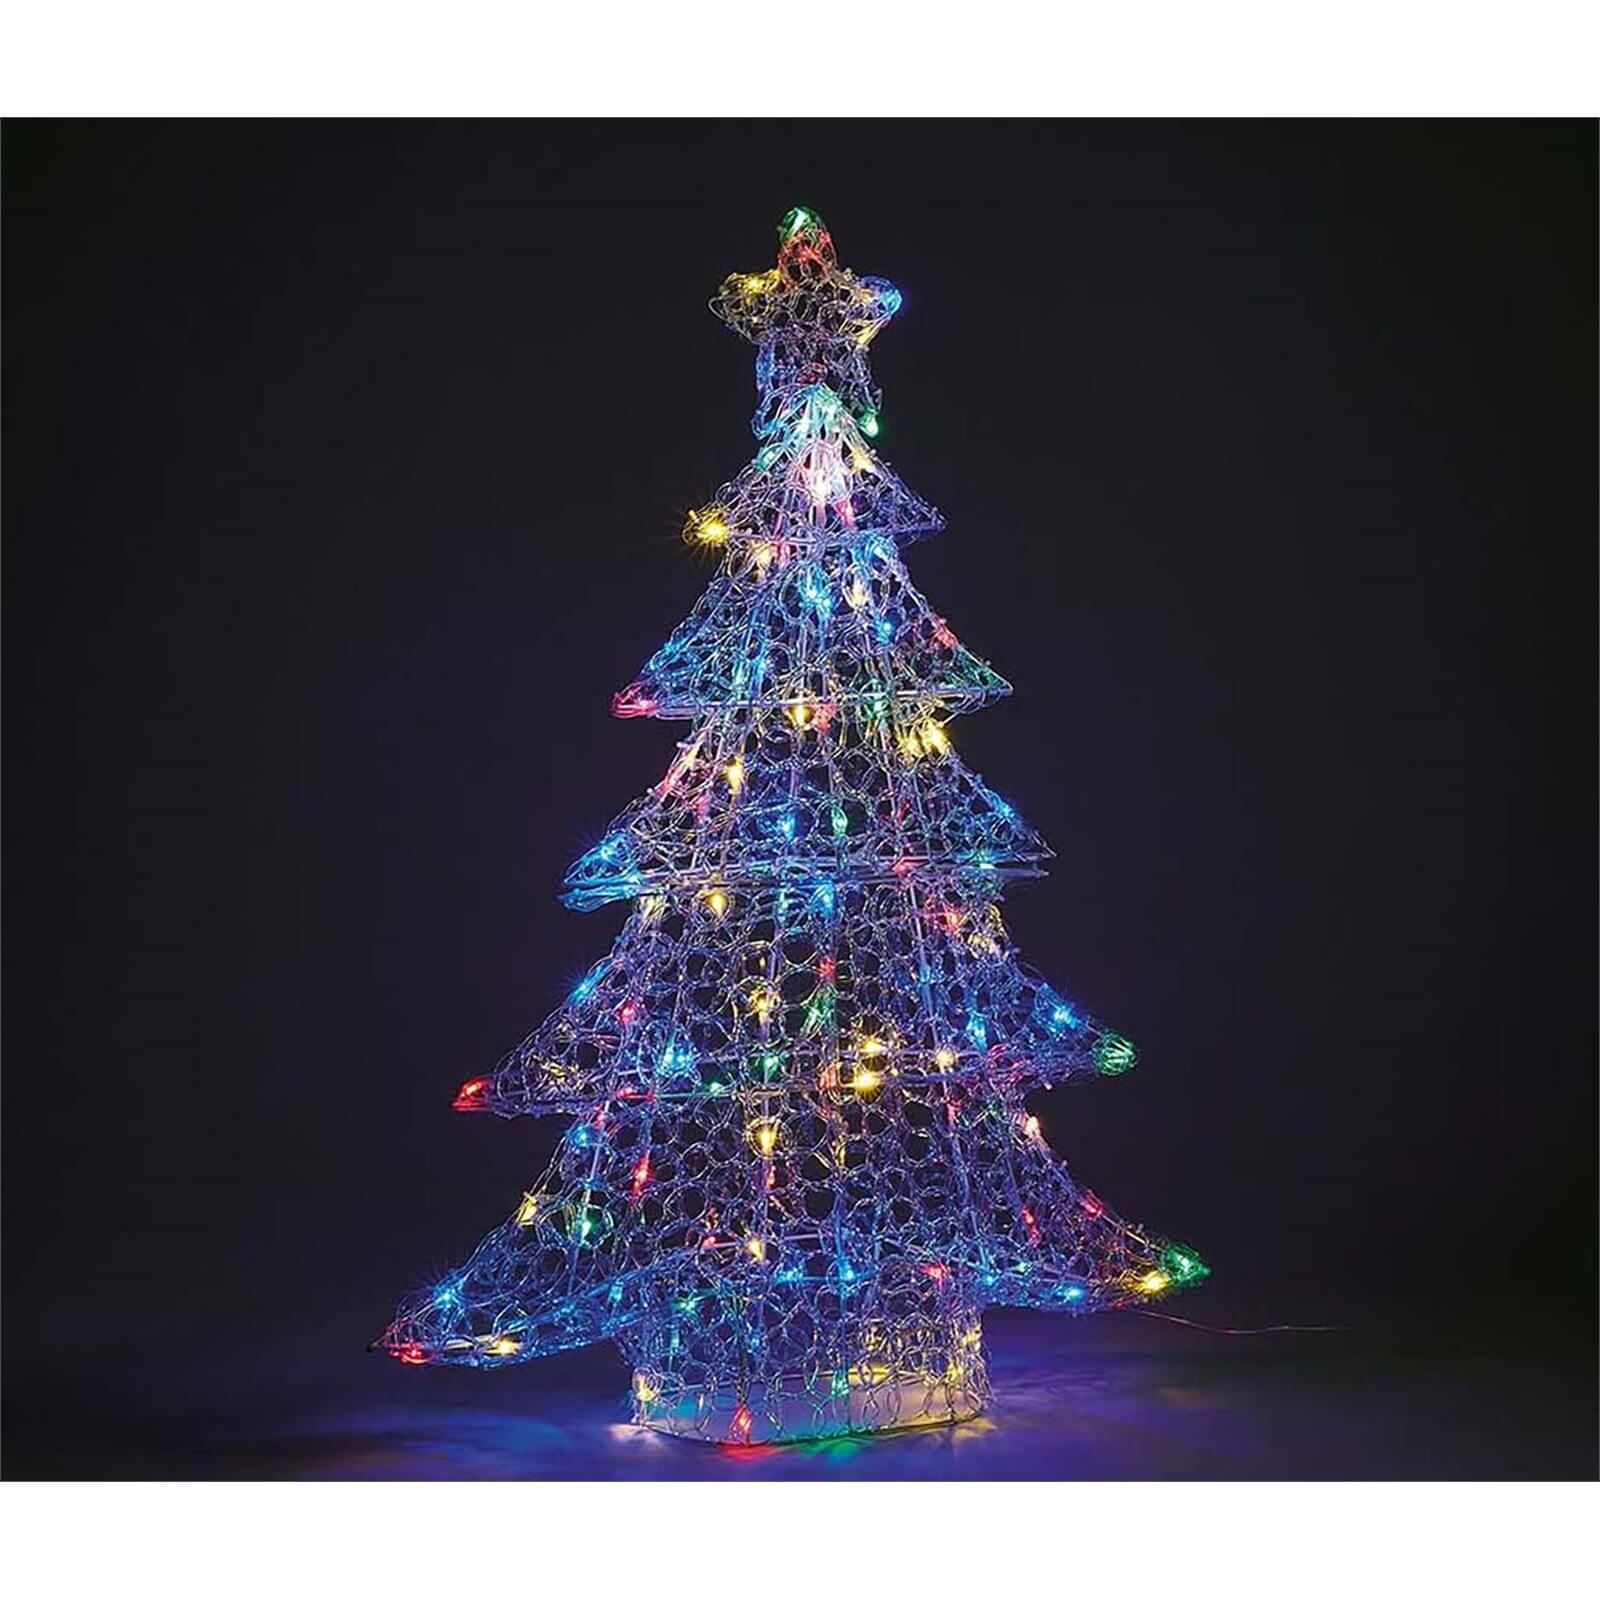 Acrylic LED Tree Multicolour 3D Christmas Light Decoration - 59cm